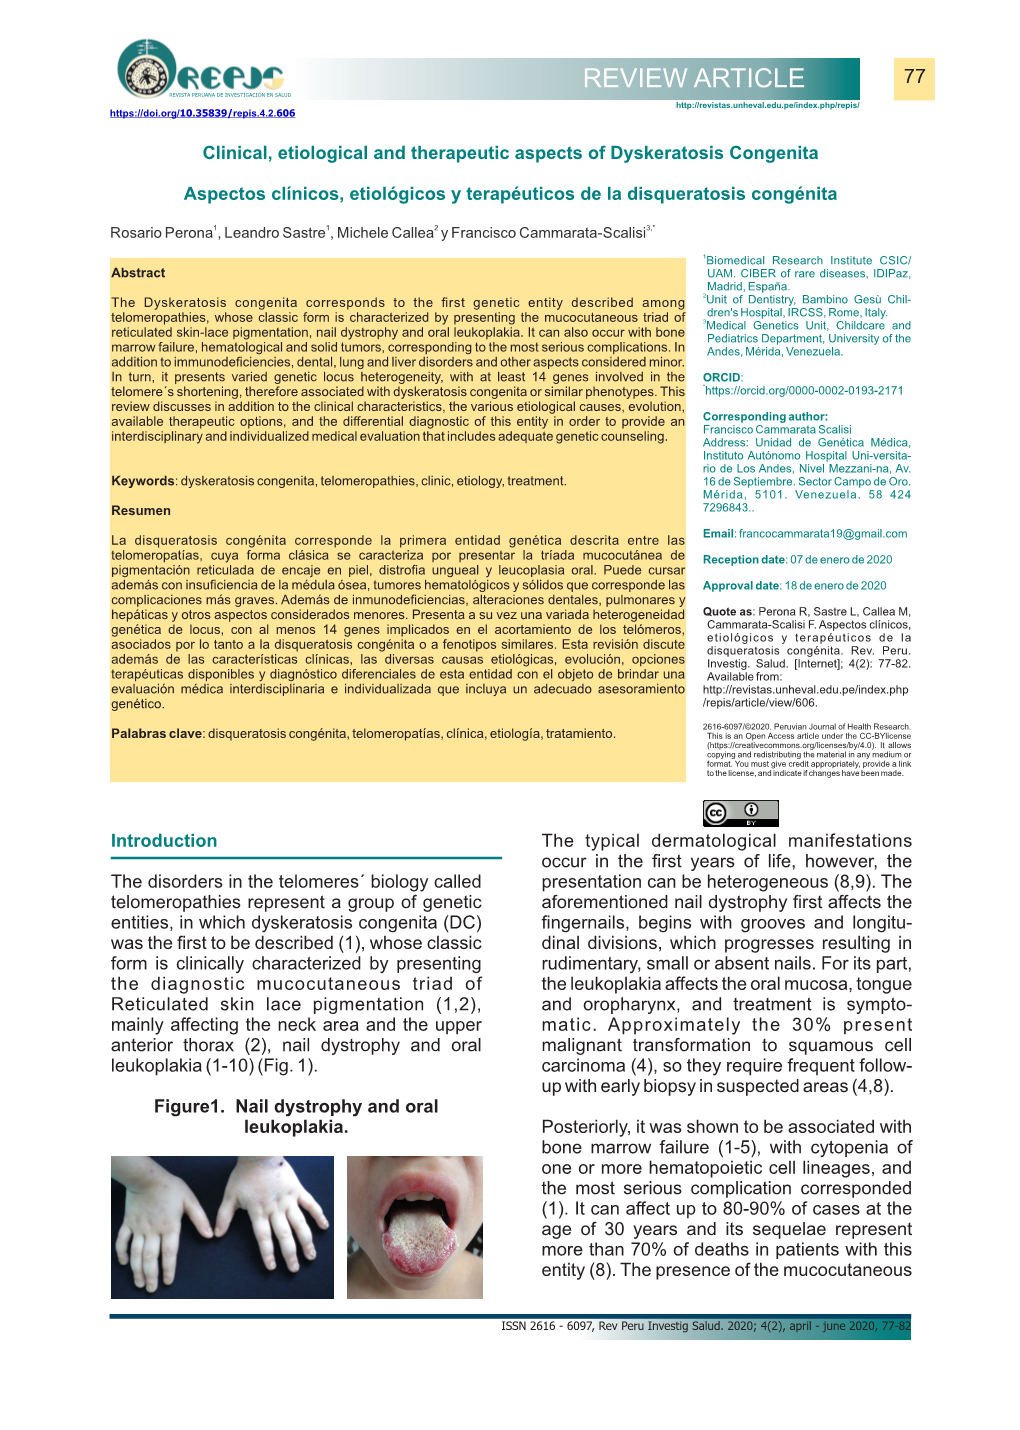 Clinical, Etiological and Therapeutic Aspects of Dyskeratosis Congenita Periodontal De Los Escolares De 7 a 12 Años Medicina De Familia.2015; 8(2): 110-118